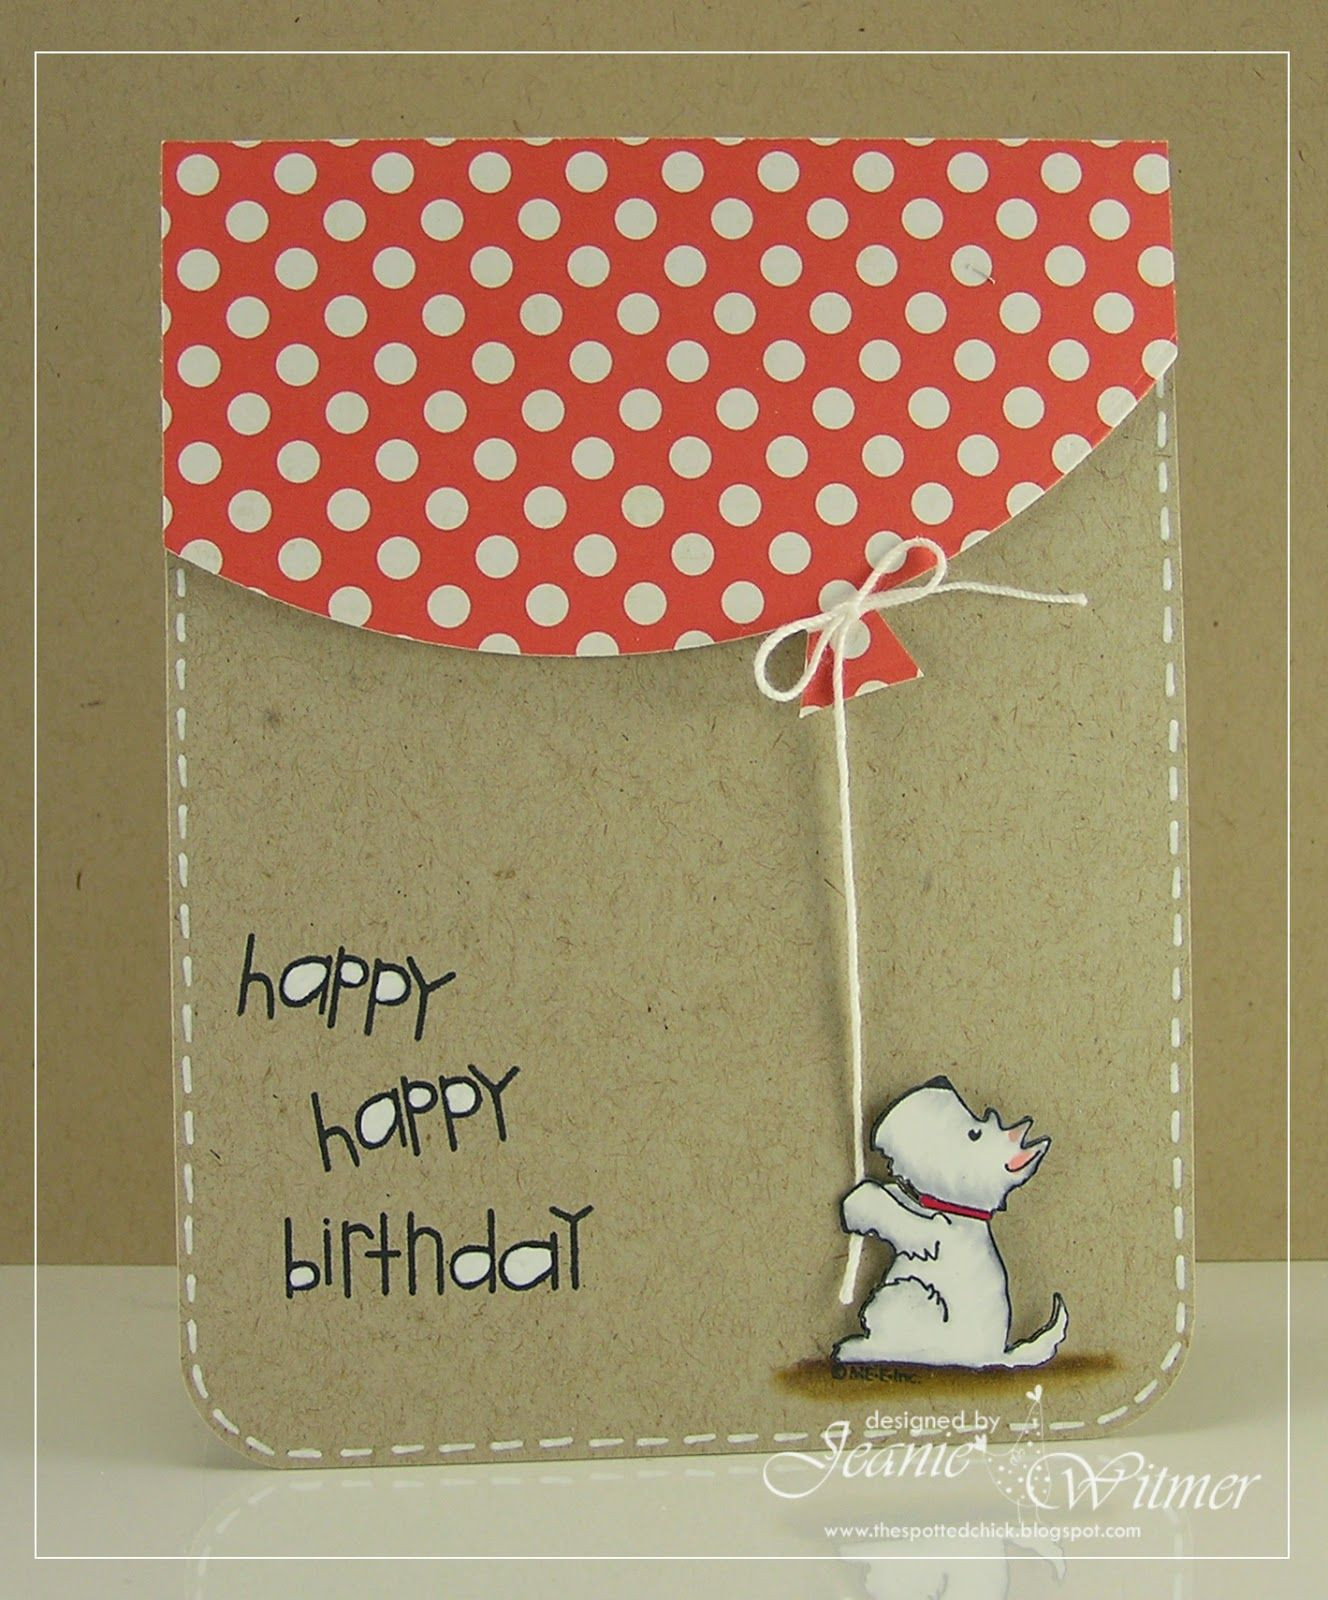 Best ideas about Cute Birthday Card Ideas
. Save or Pin Happy Birthday Card It s Your Birthday Now.